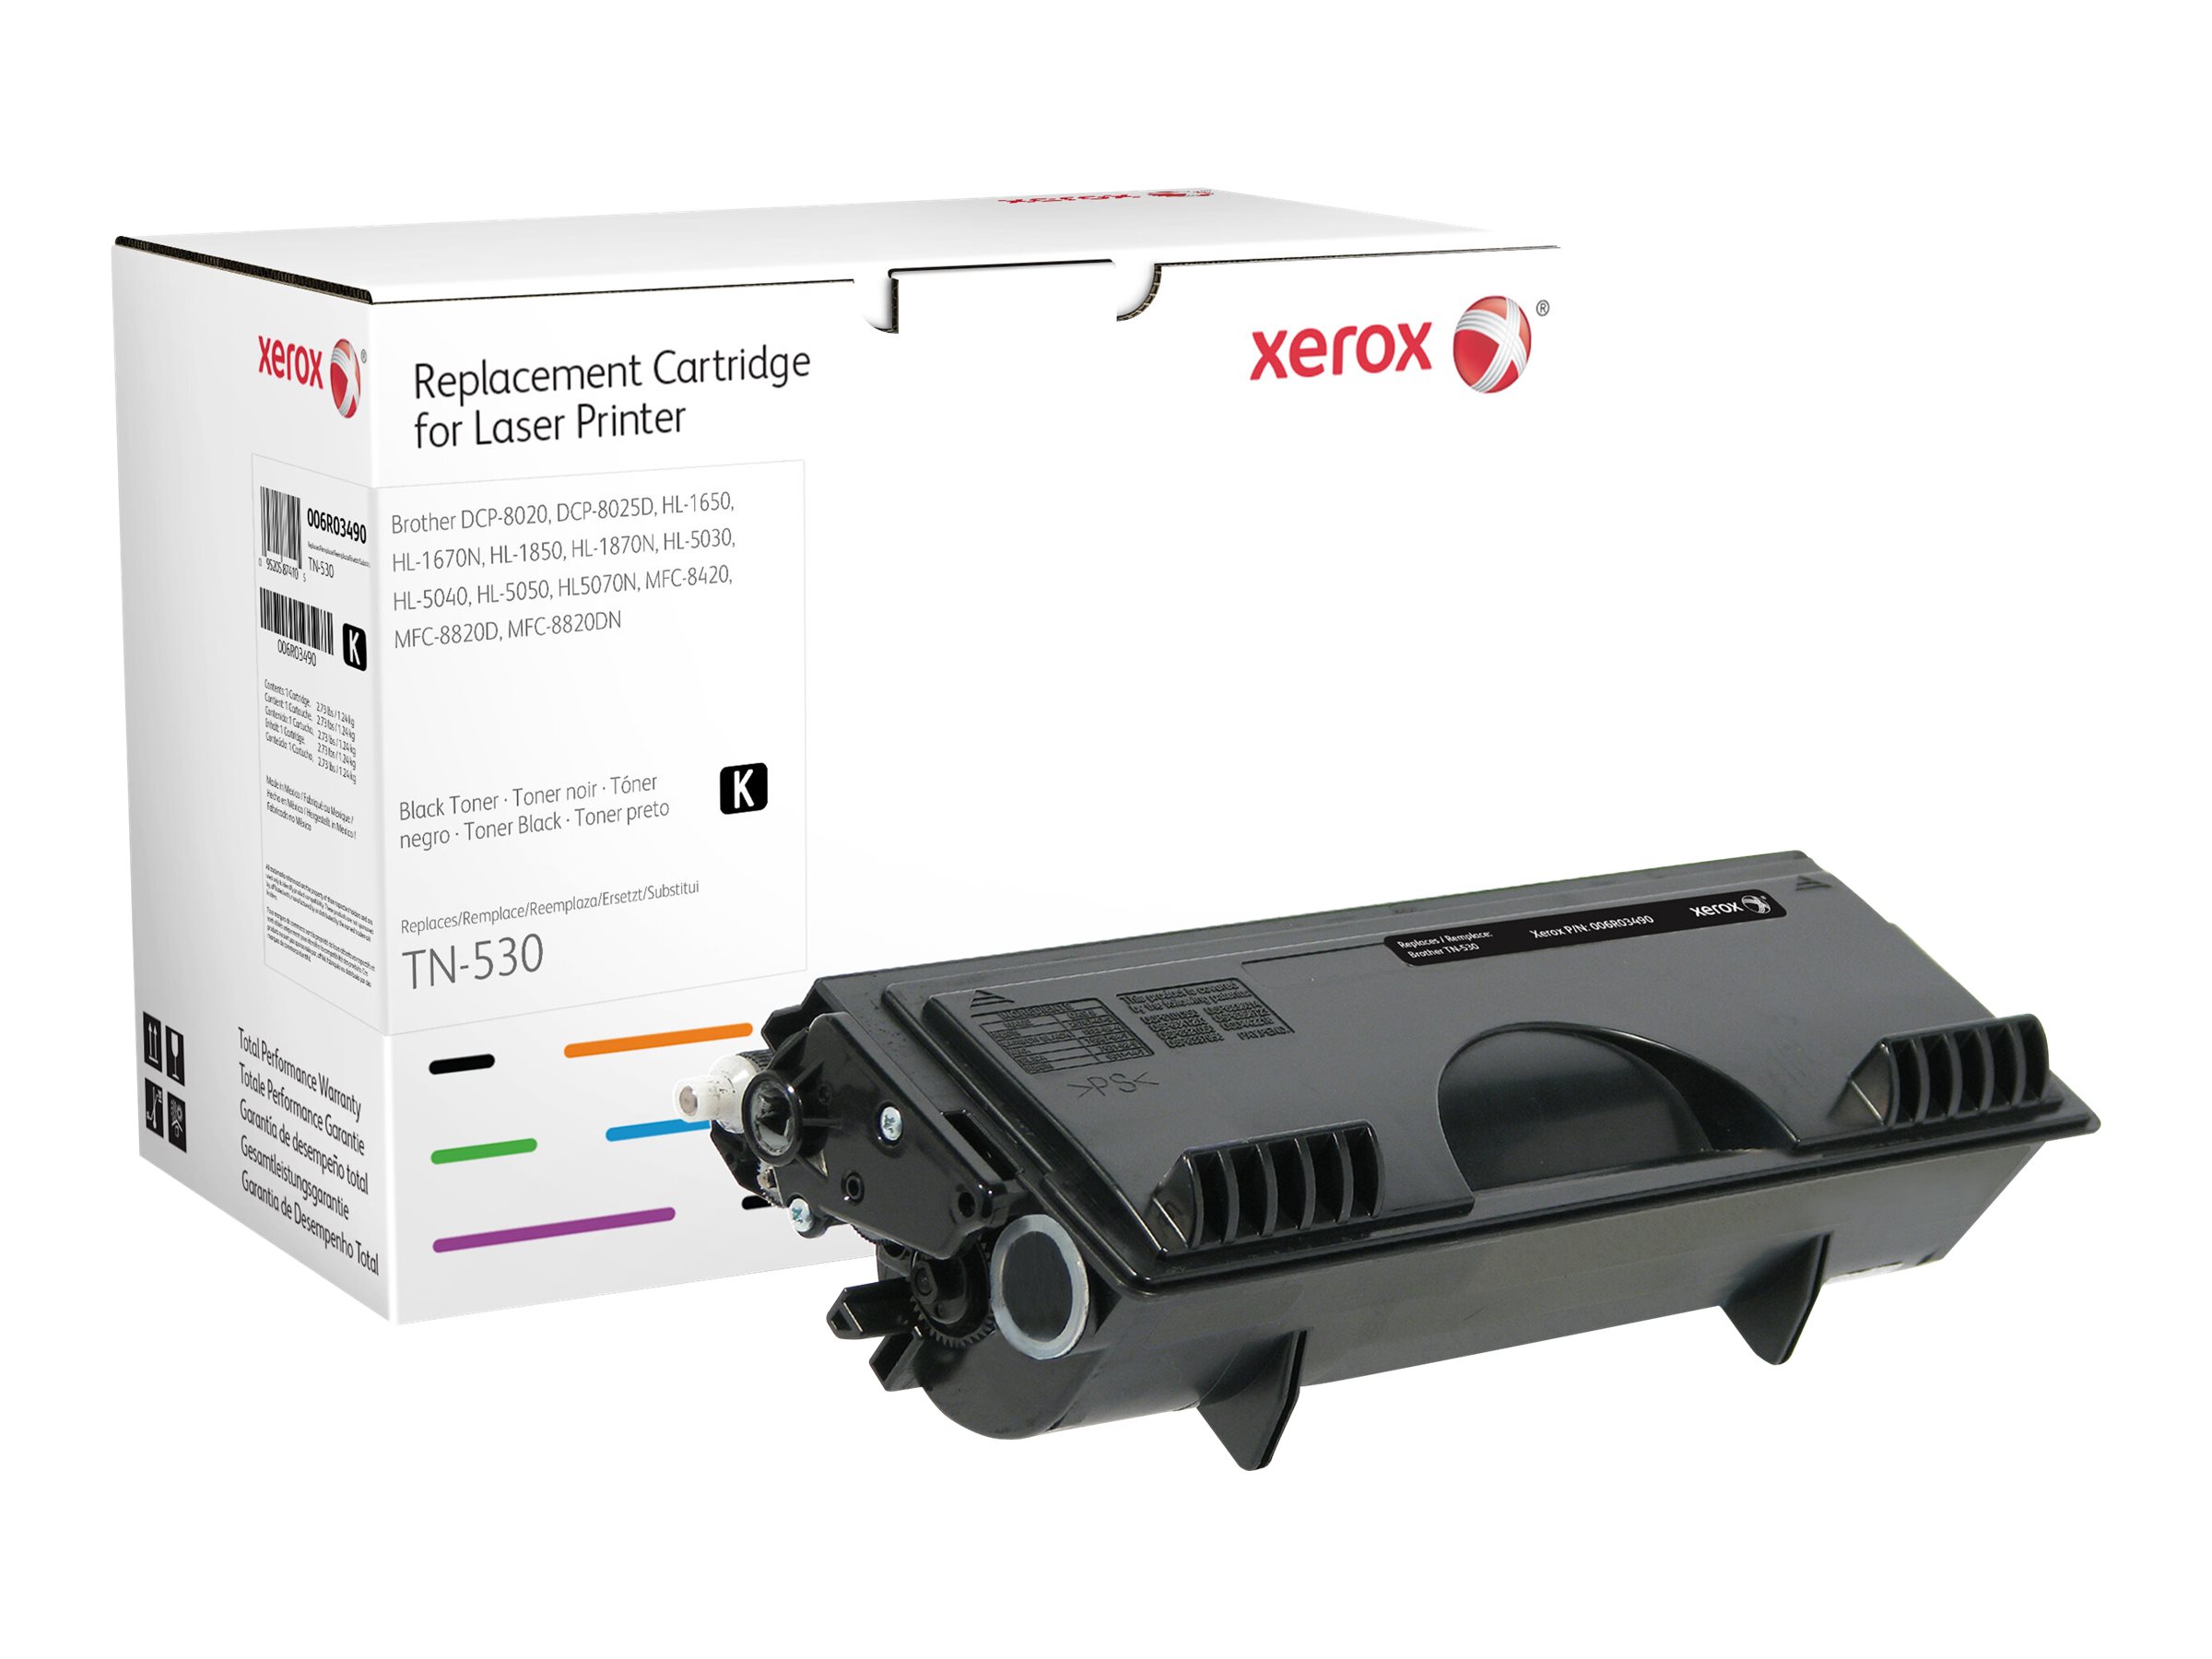 Xerox Brother DCP-8020 |